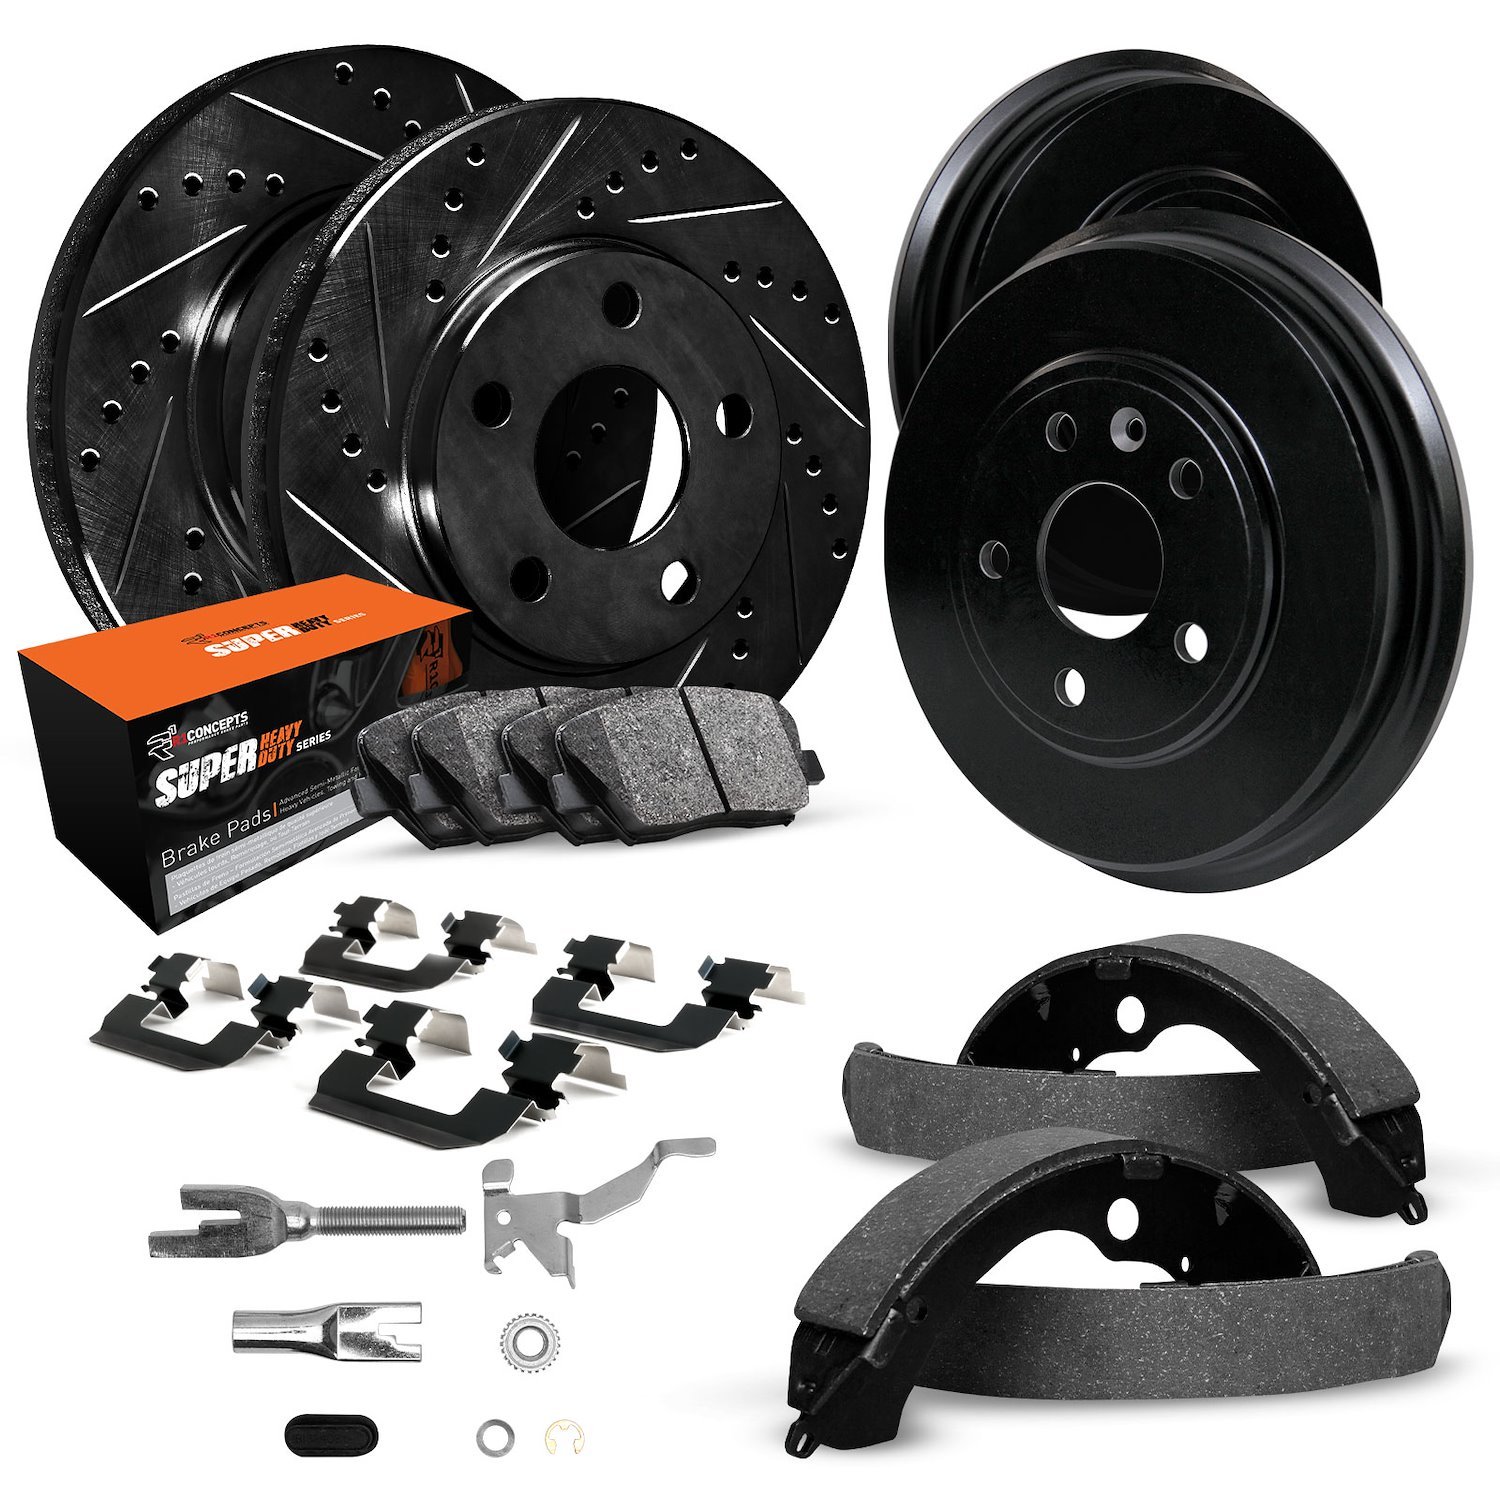 E-Line Slotted Black Brake Rotor & Drum Set w/Super-Duty Pads, Shoes, Hardware/Adjusters, Fits Select Lexus/Toyota/Scion